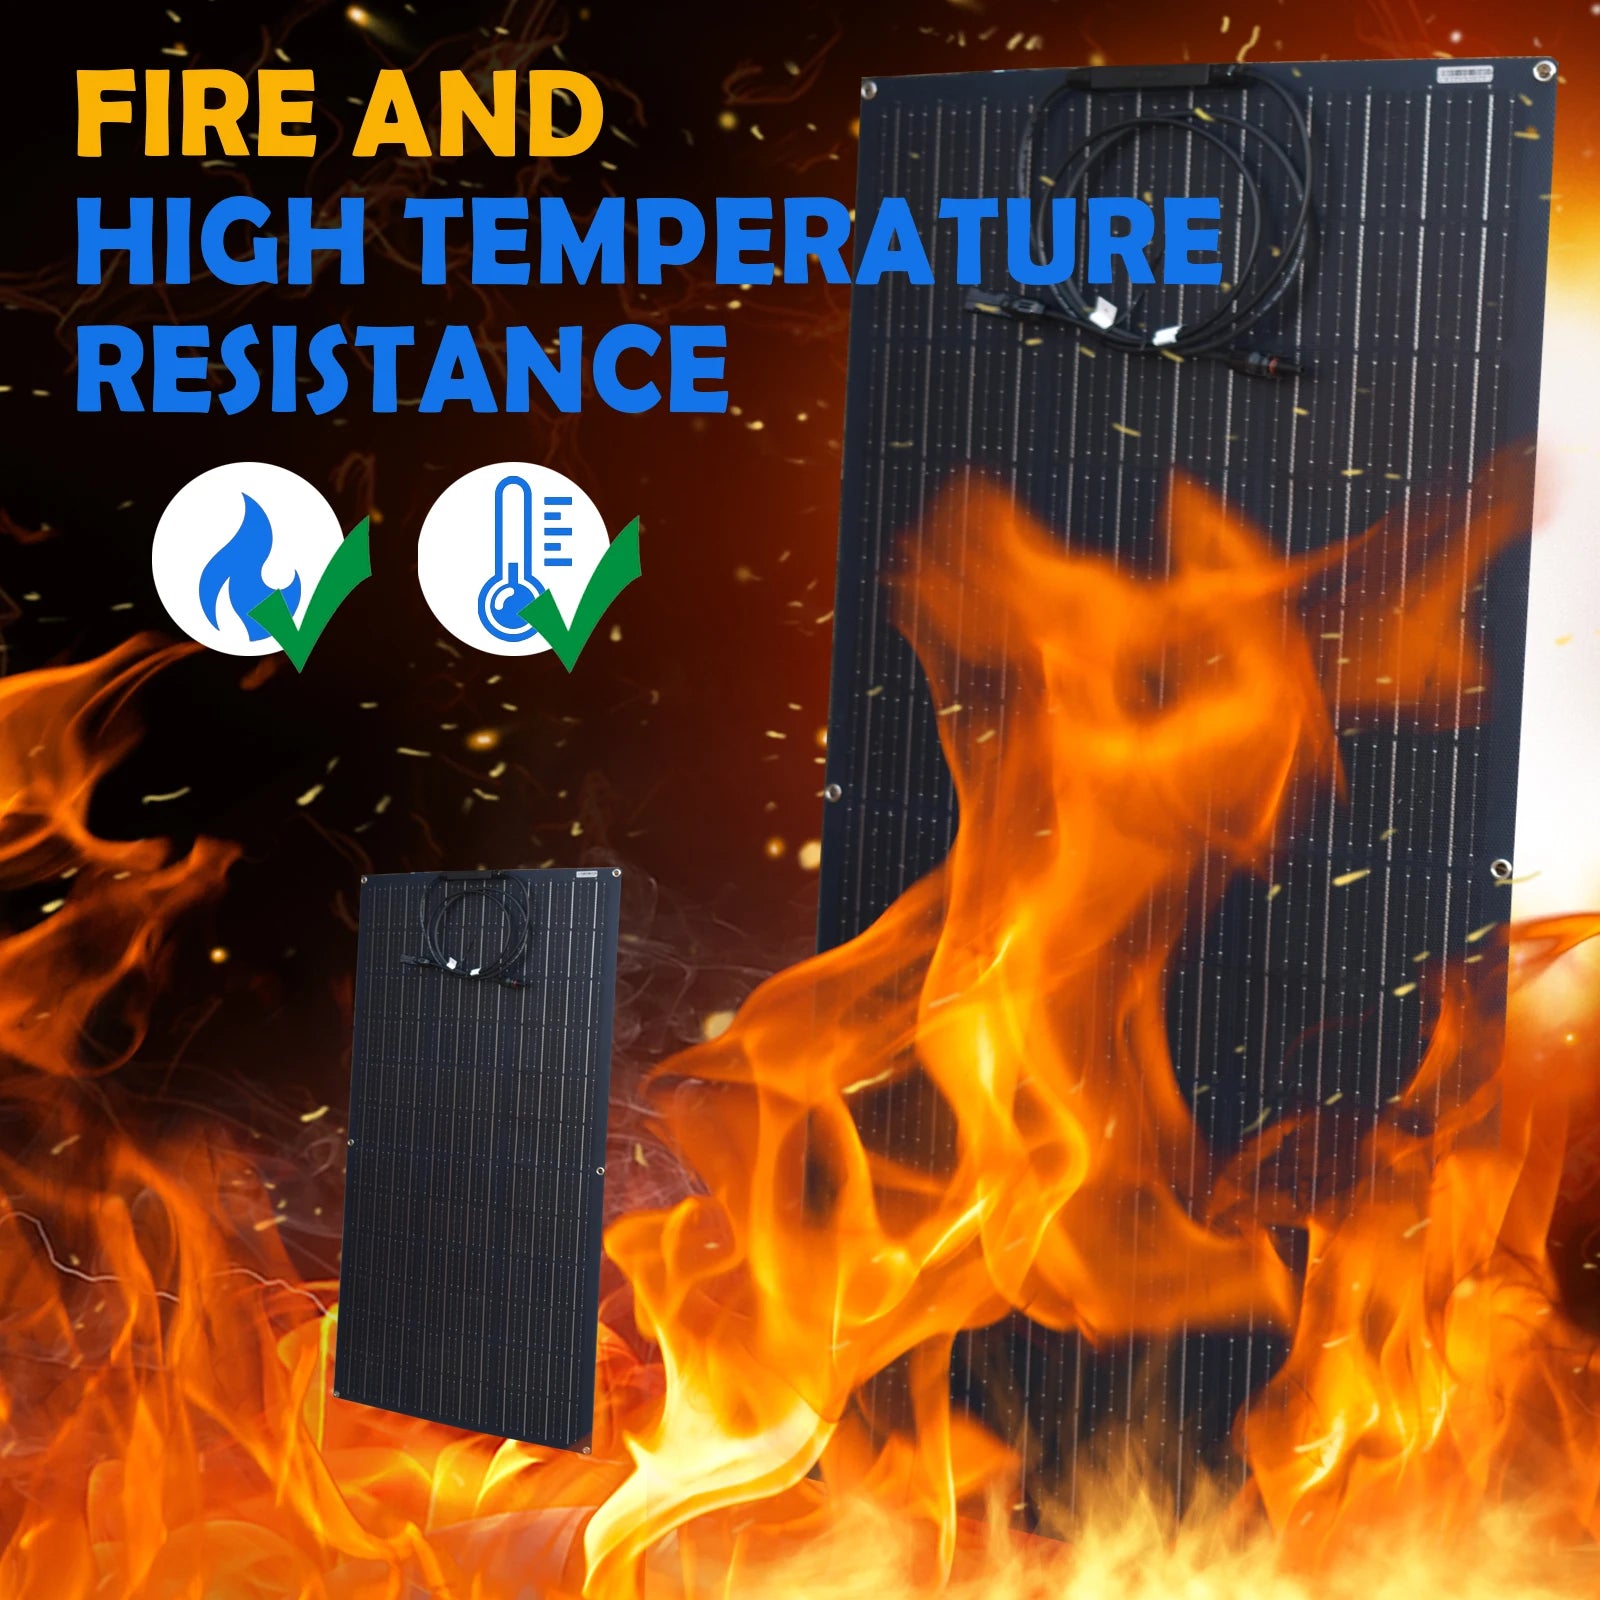 JINGYANG long lasting Semi Flexible solar panel, Fire-resistant and high-temperature tolerant design ensures reliable performance in harsh environments.